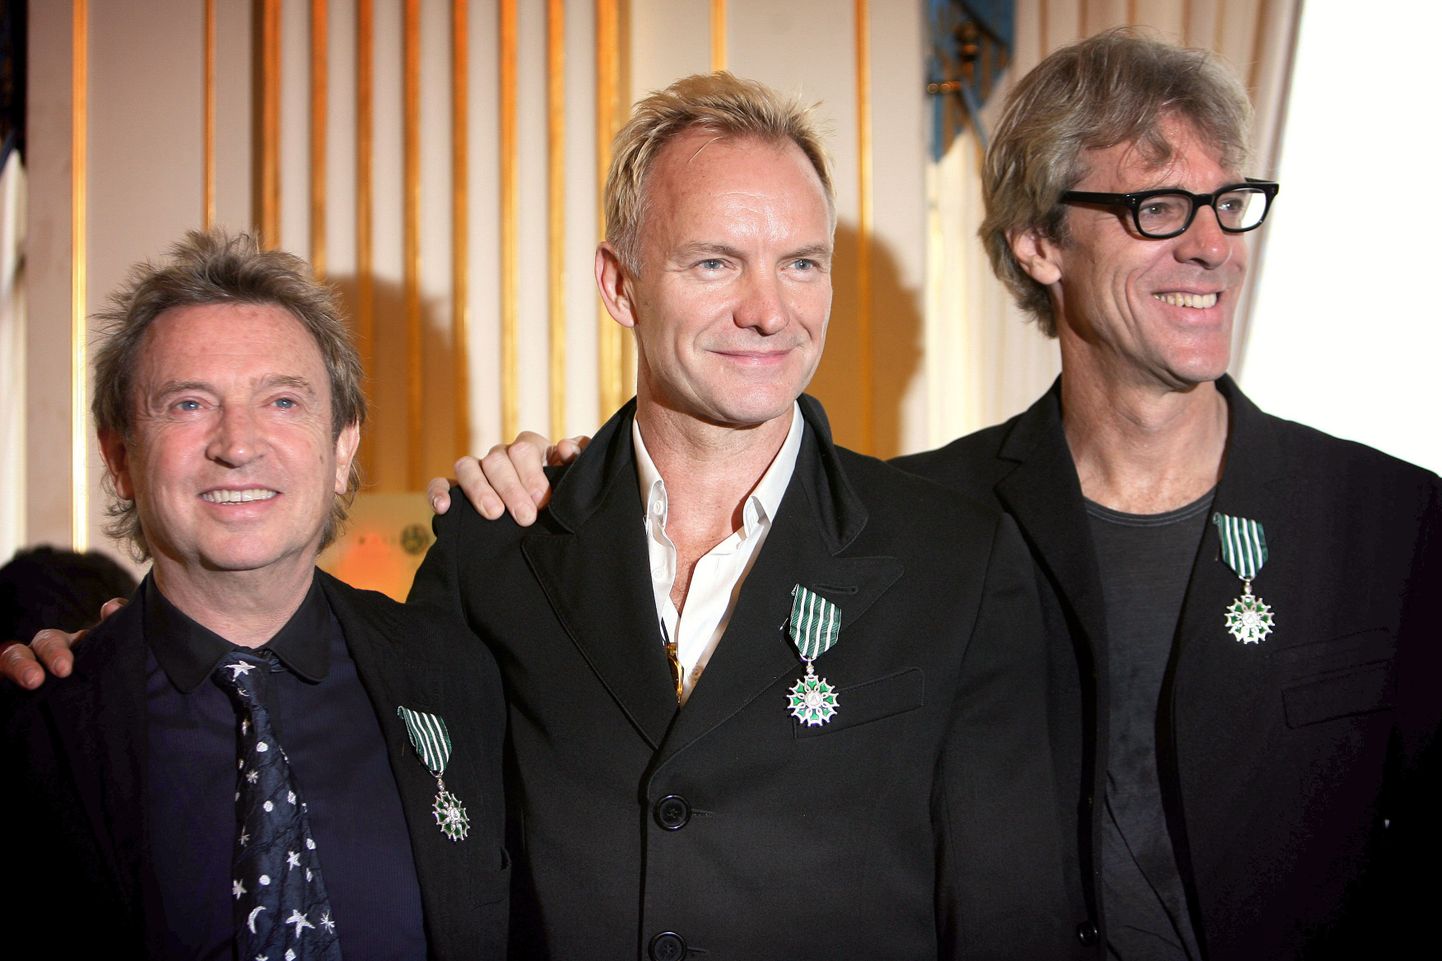 Ansambli The Police liikmed Andy Summers, Sting ja Stewart Copeland